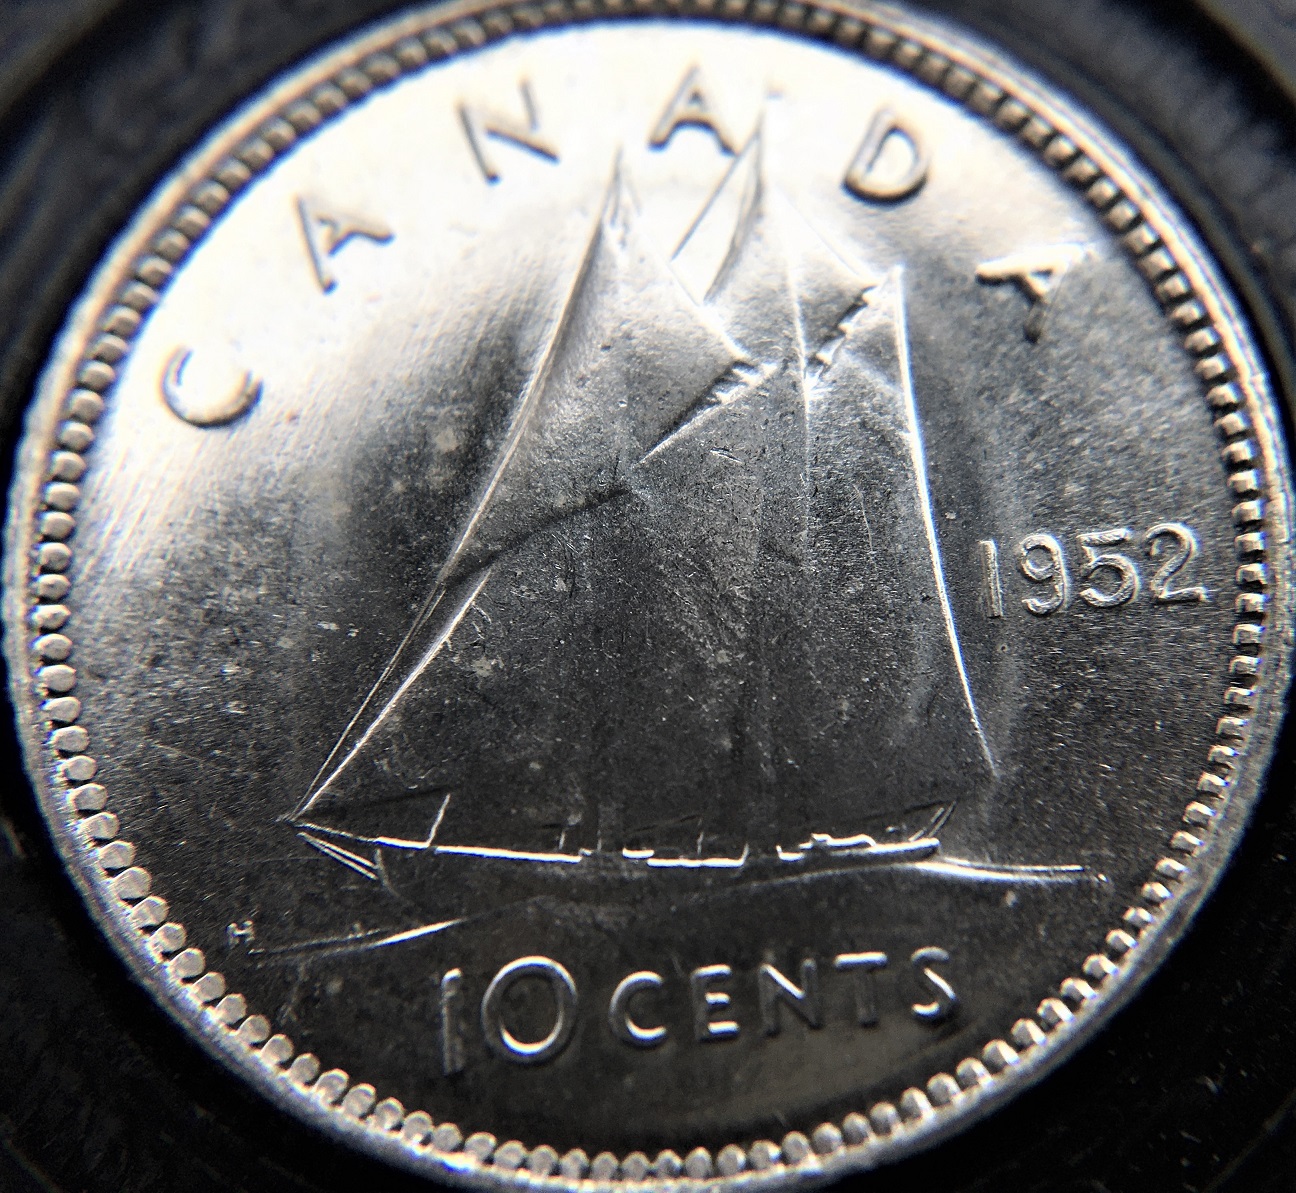 10 cents 1952 revers double 19 40.jpg